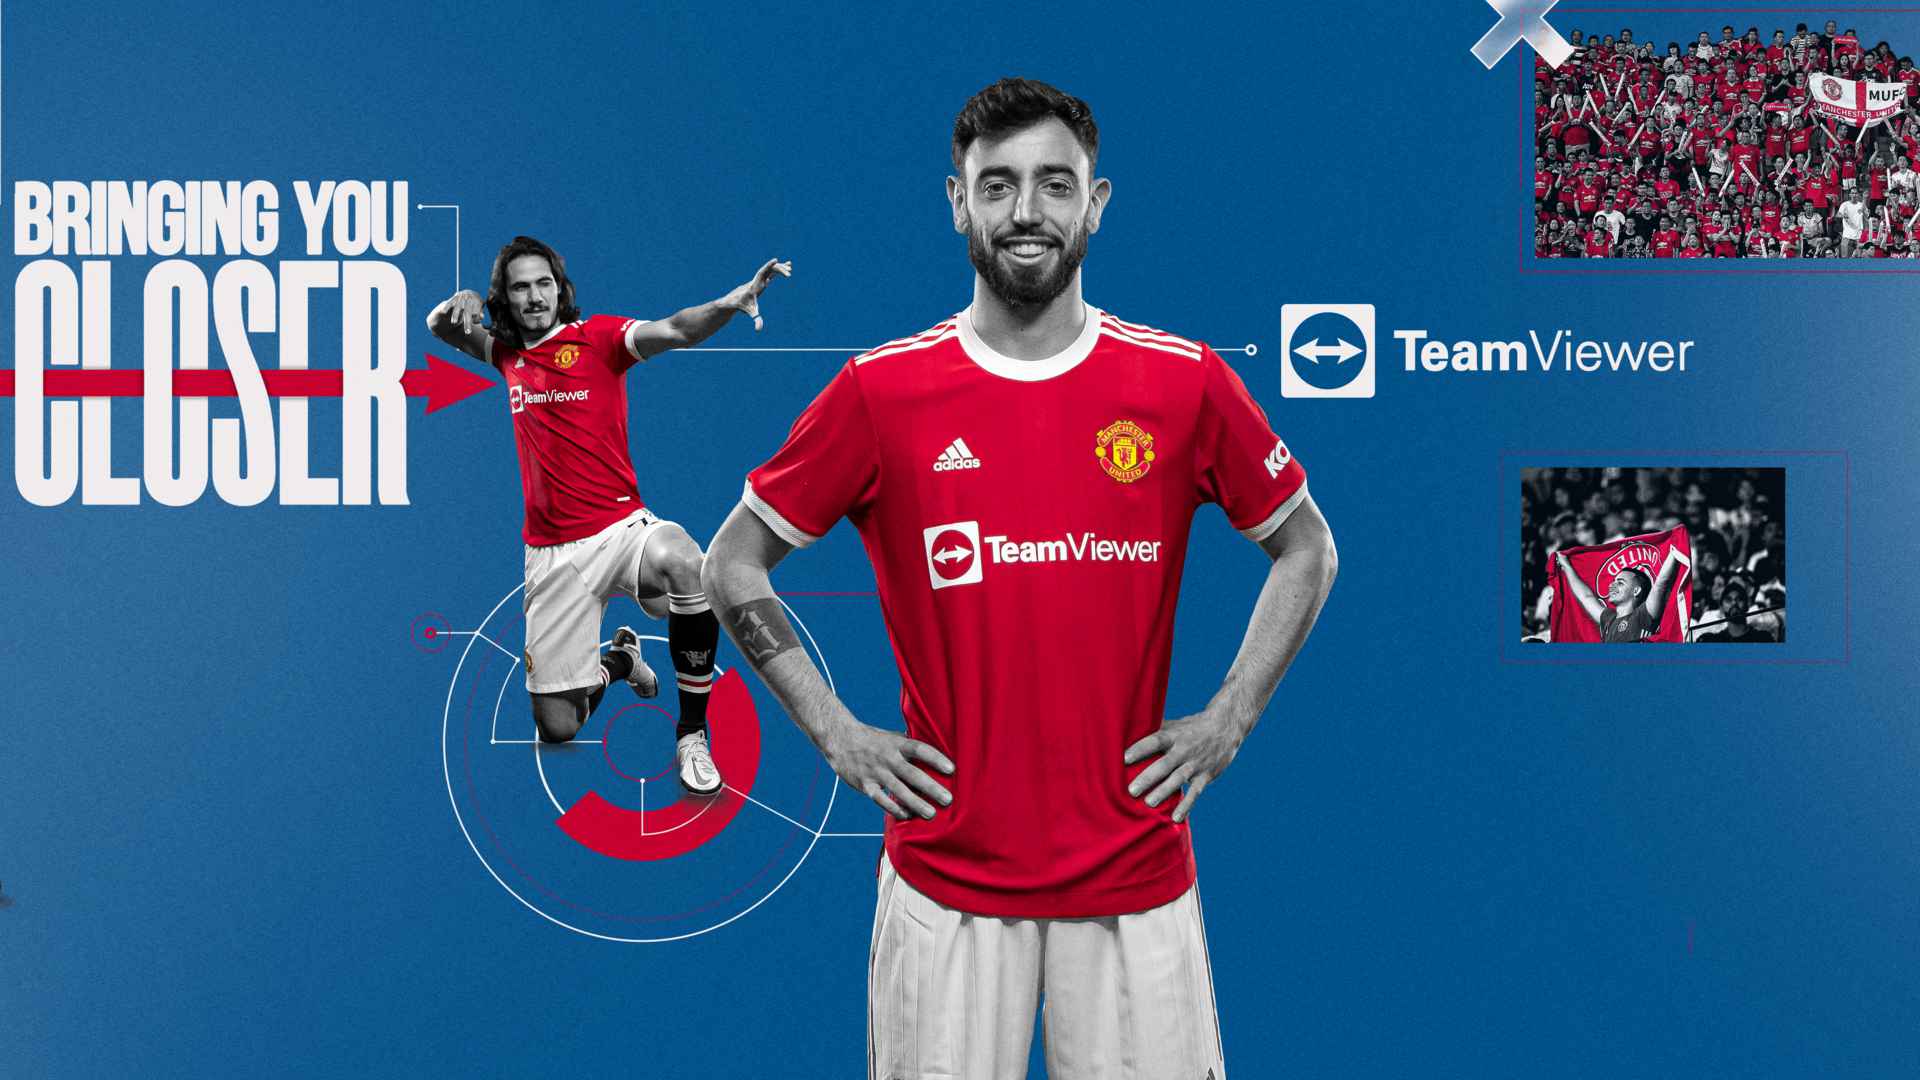 TeamViewer unveiled as new shirt partner of Man Utd